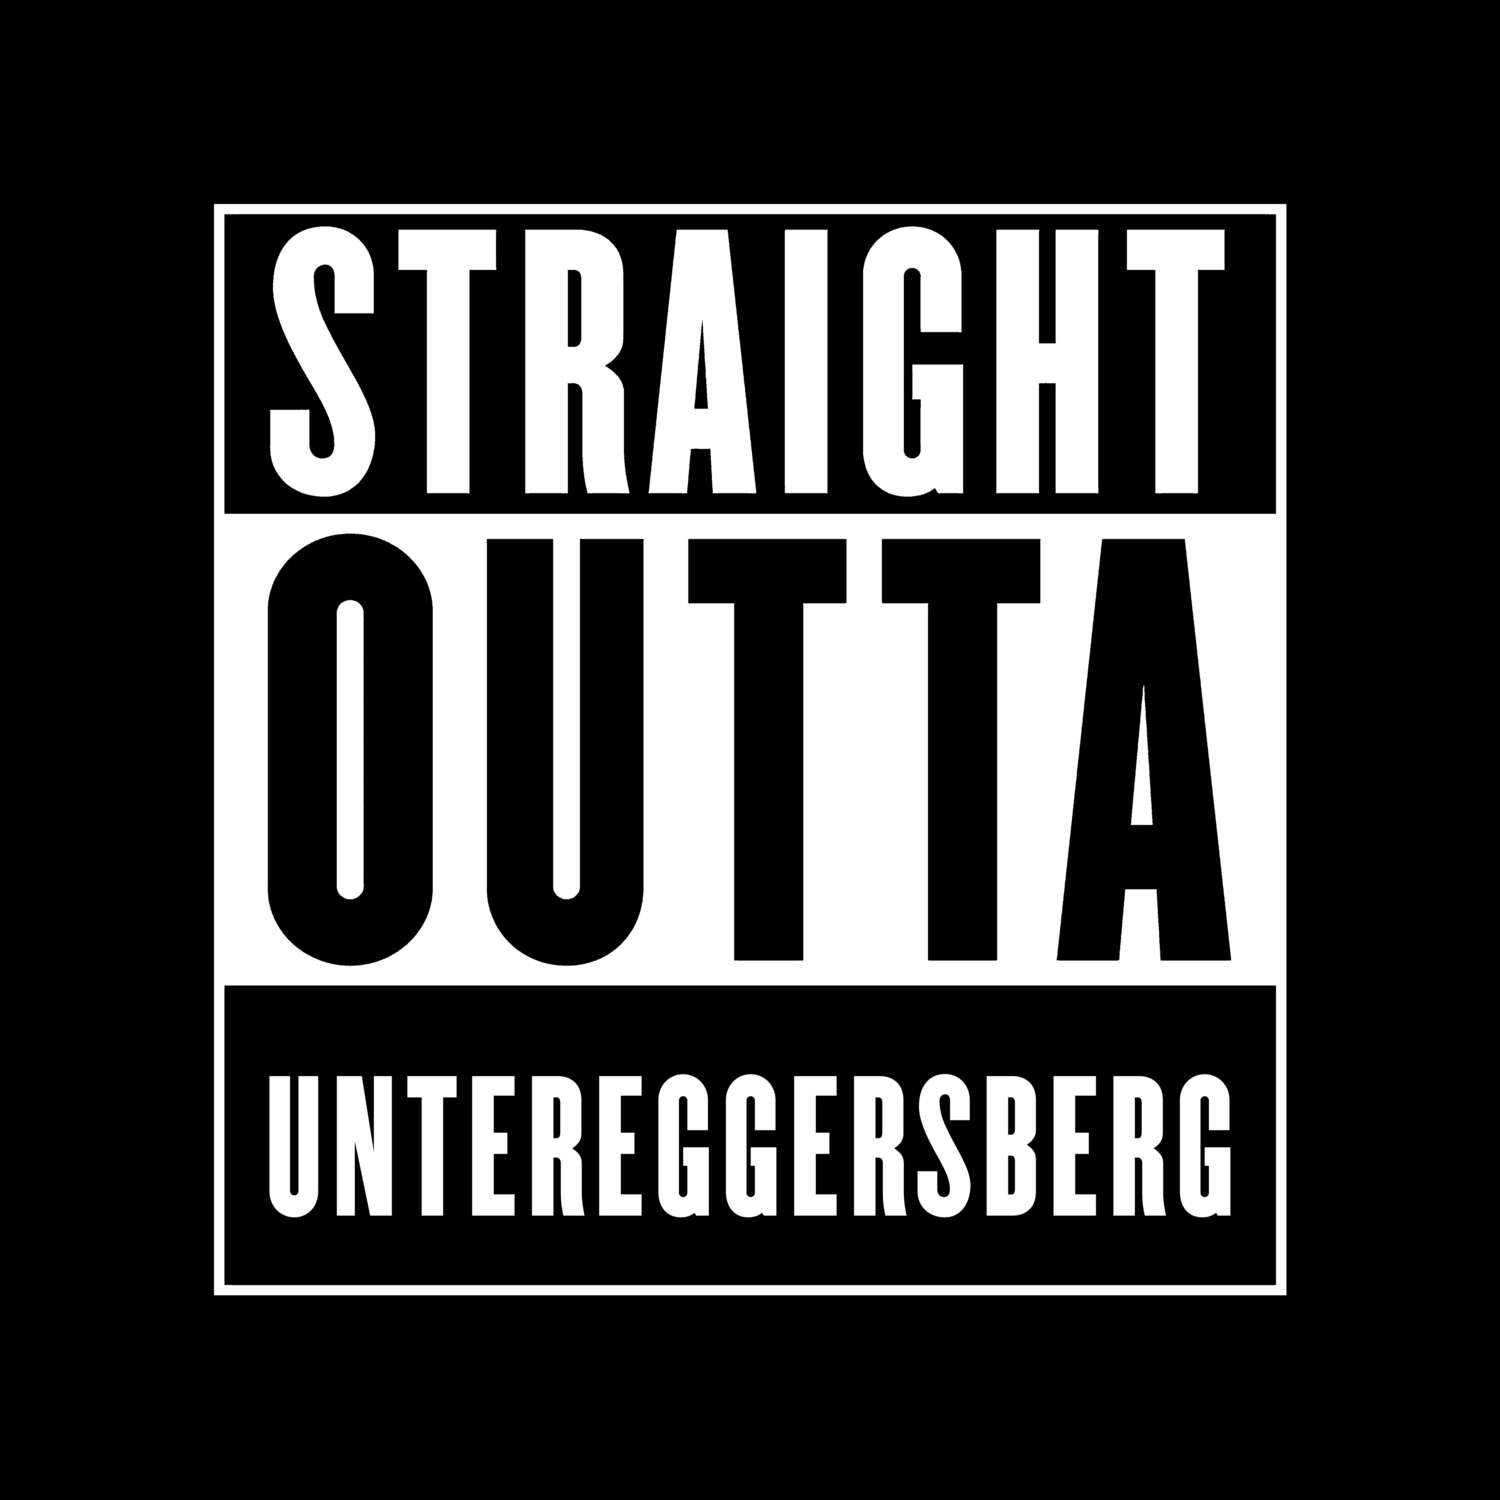 Untereggersberg T-Shirt »Straight Outta«